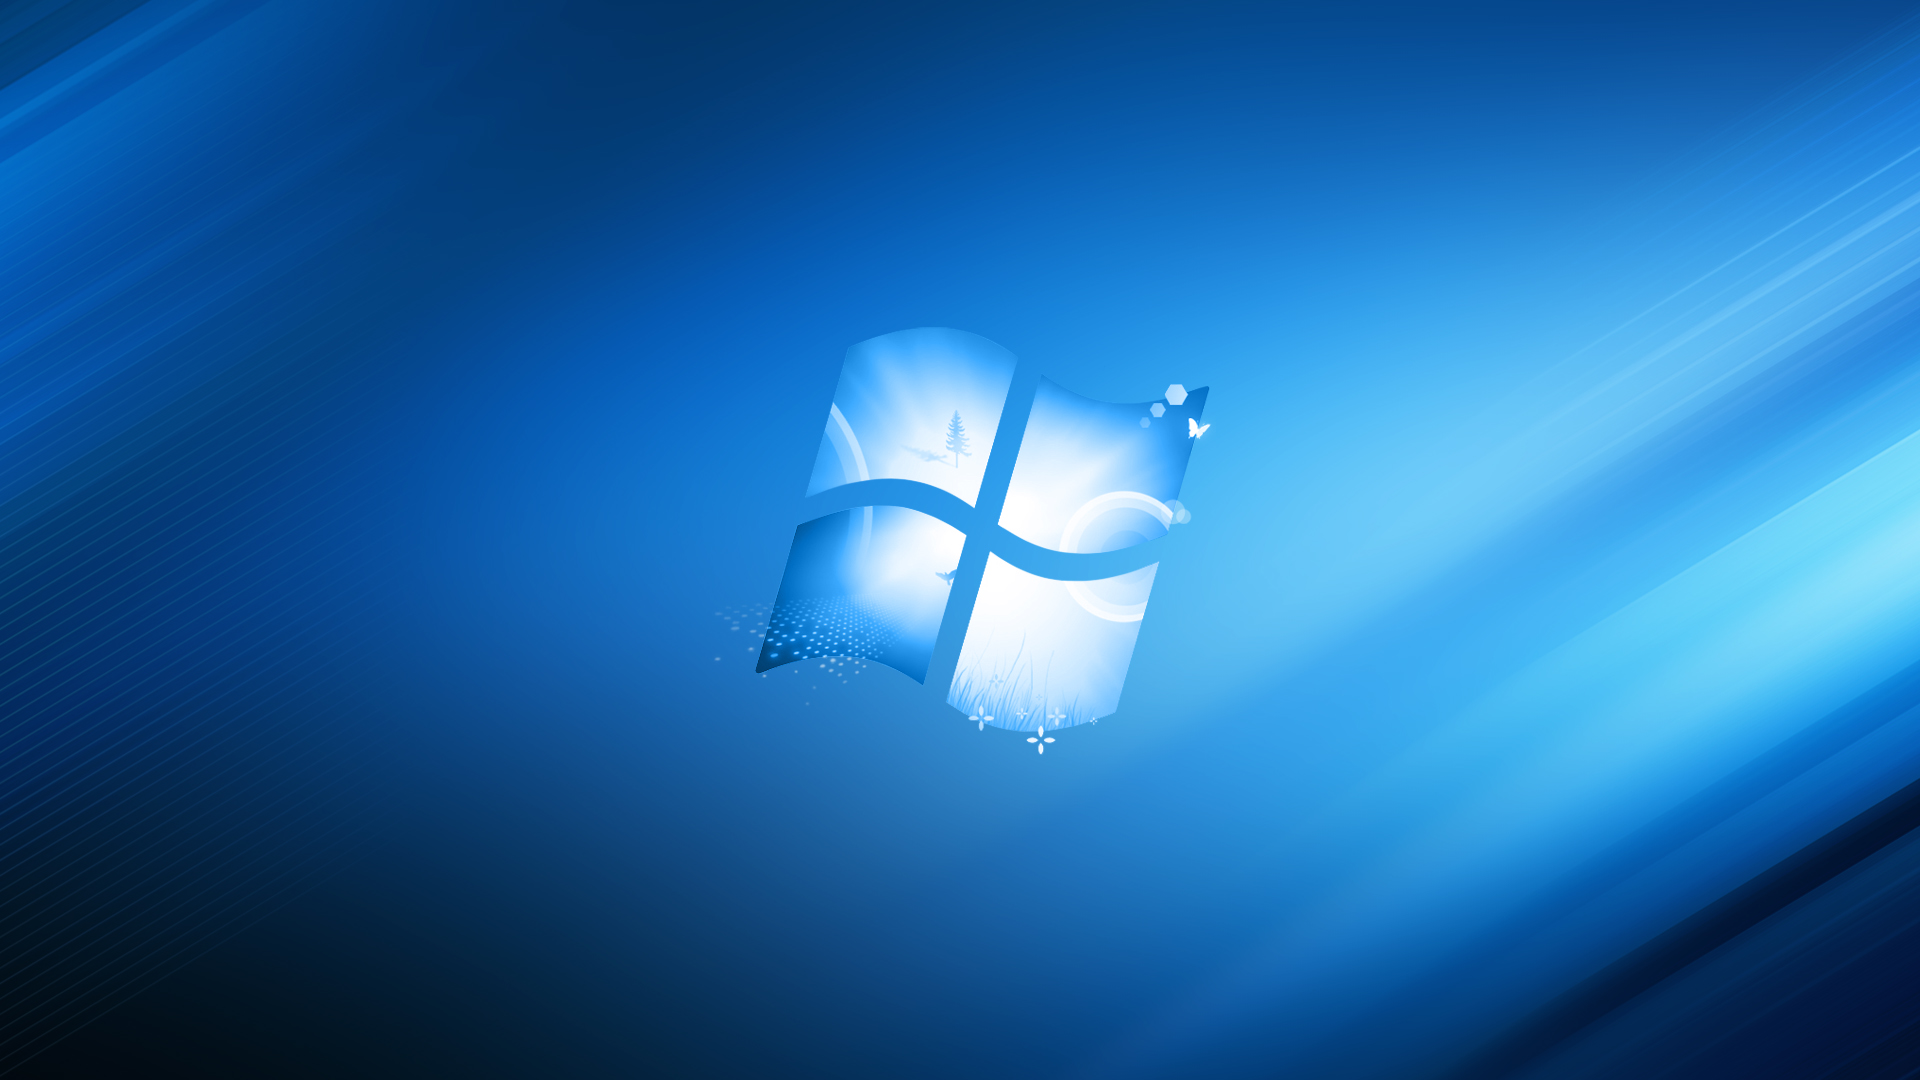 [50+] HP Live Wallpaper Windows 8.1 | WallpaperSafari.com